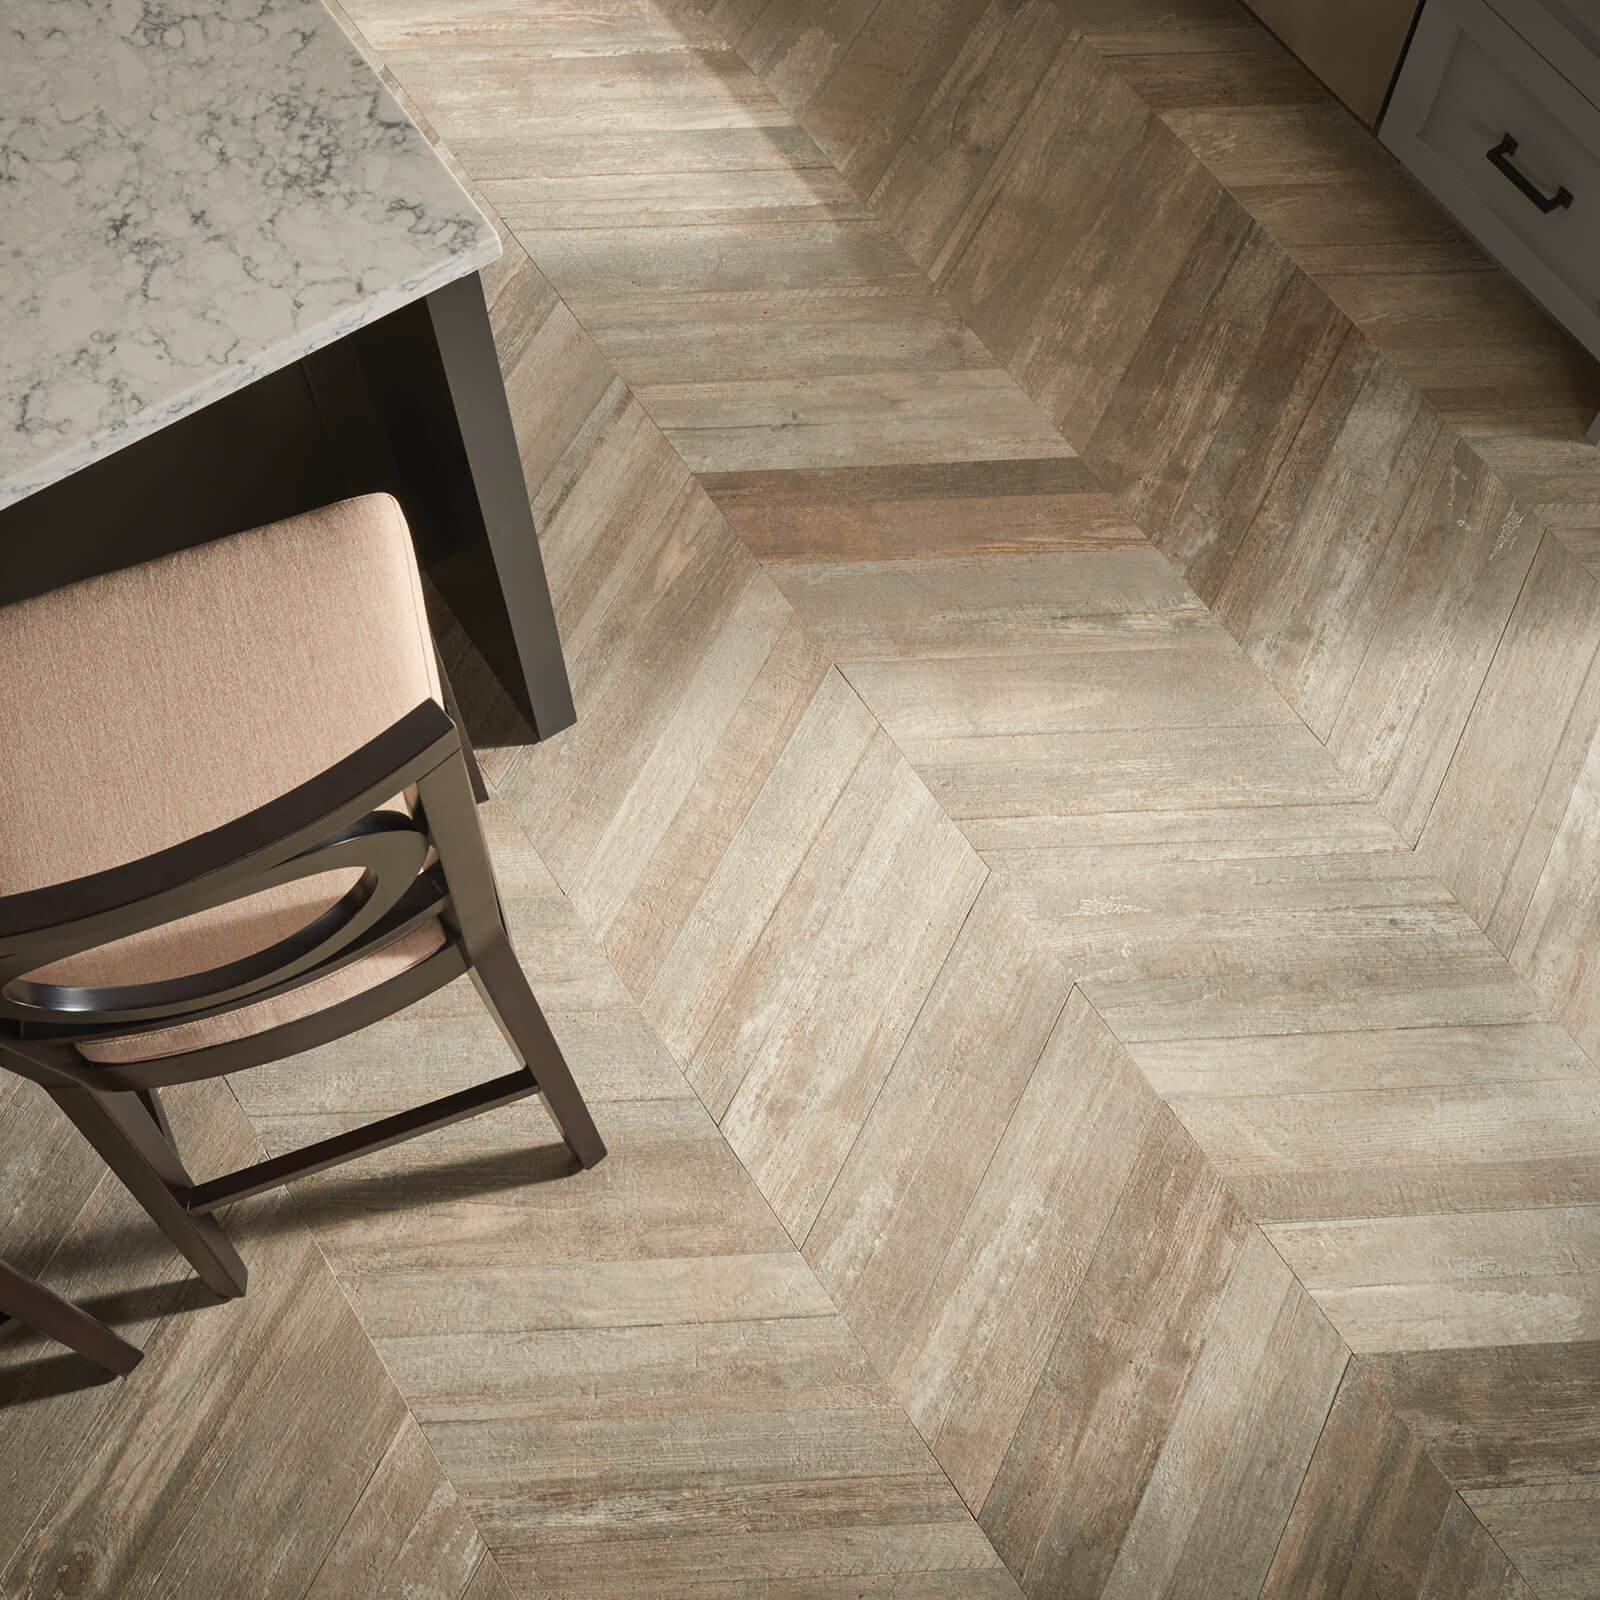 Glee chevron tile flooring | Jabara's